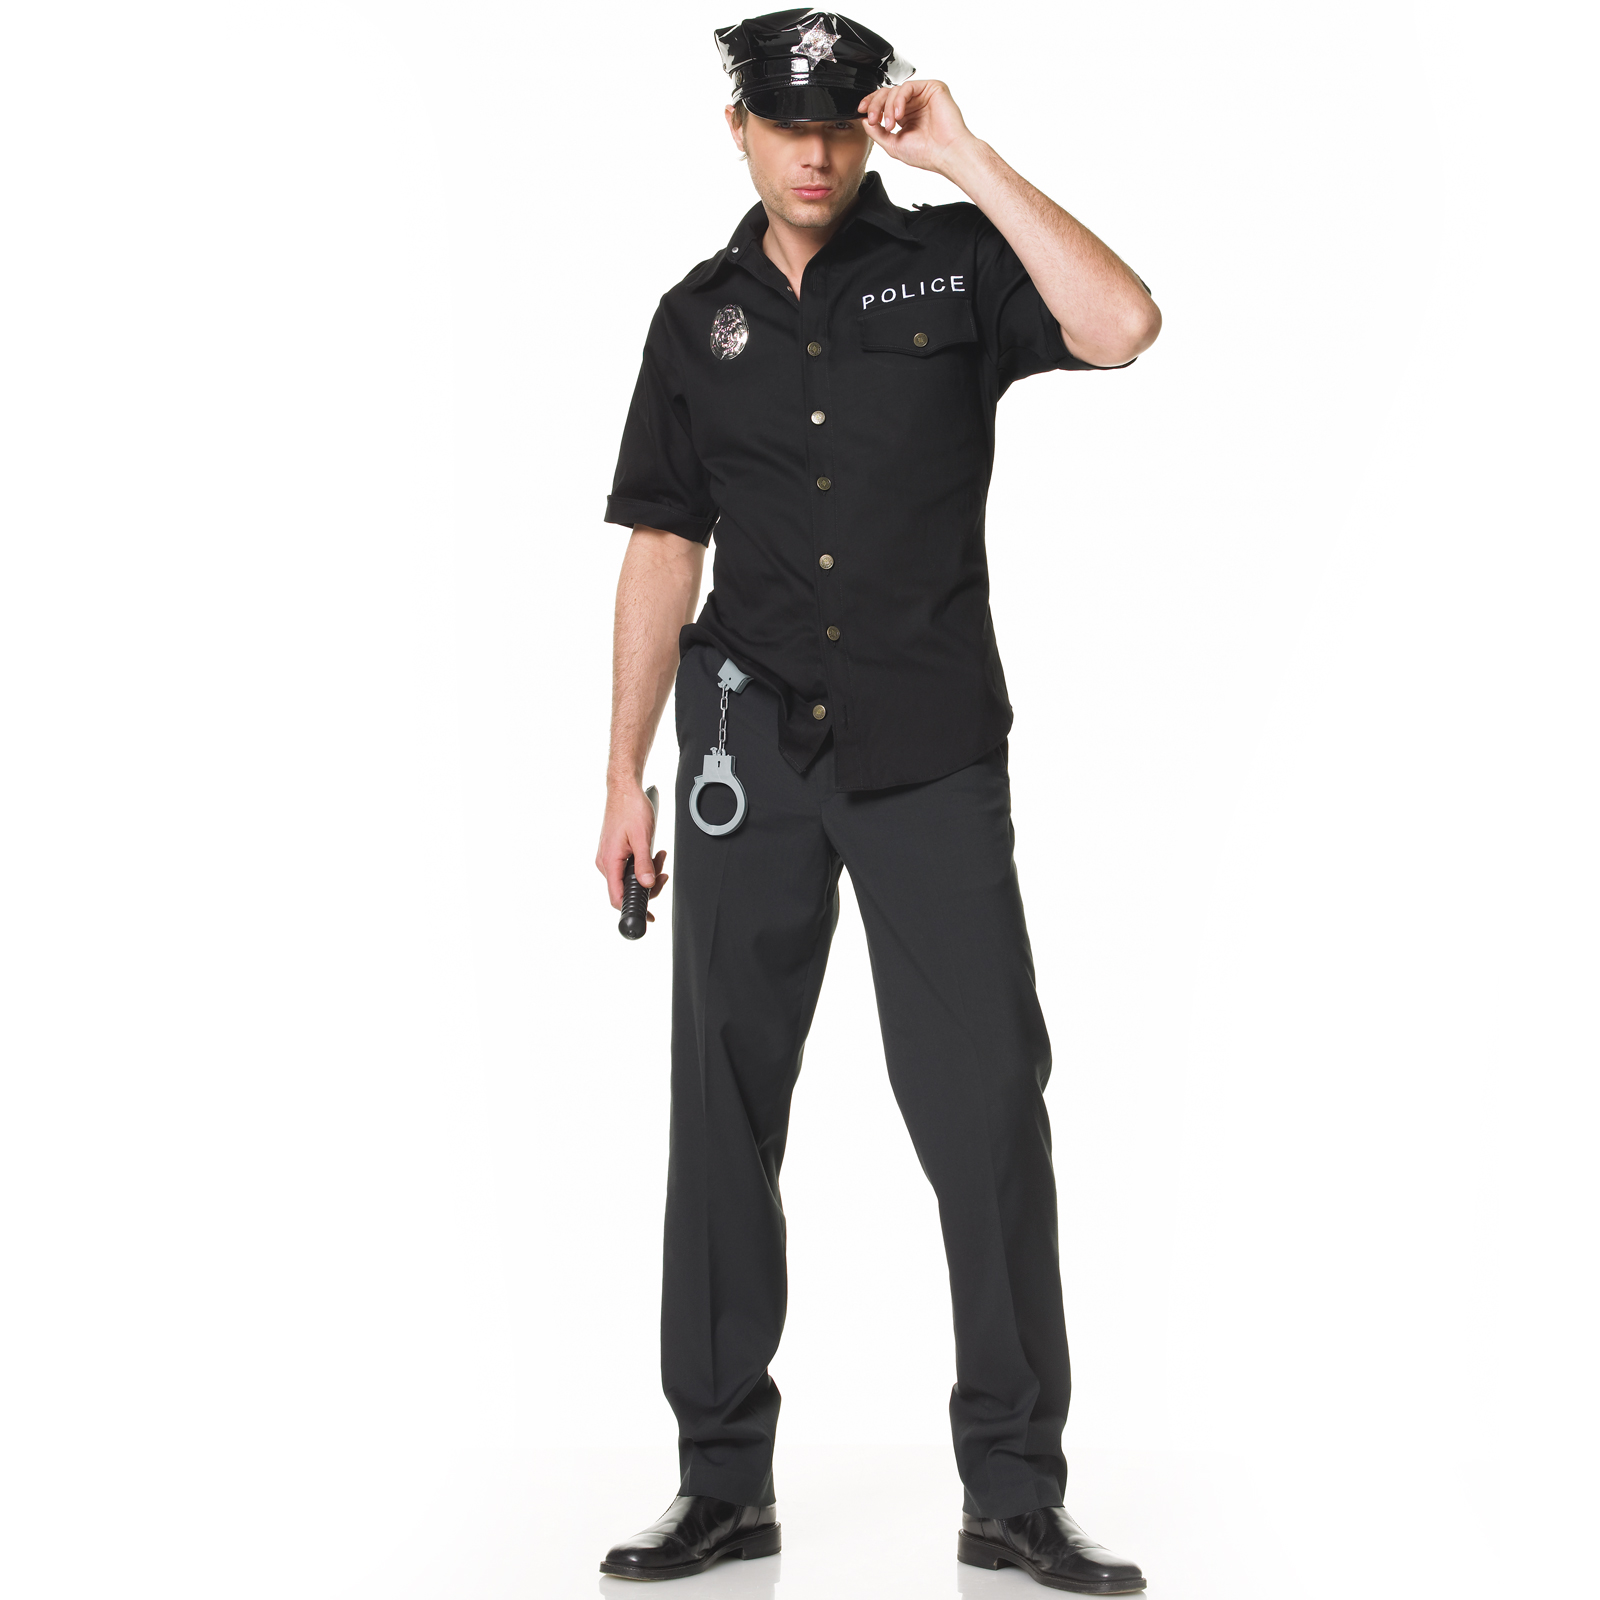 Leg Avenue Men's Officer Frisk Me Adult Costume - Medium/Large